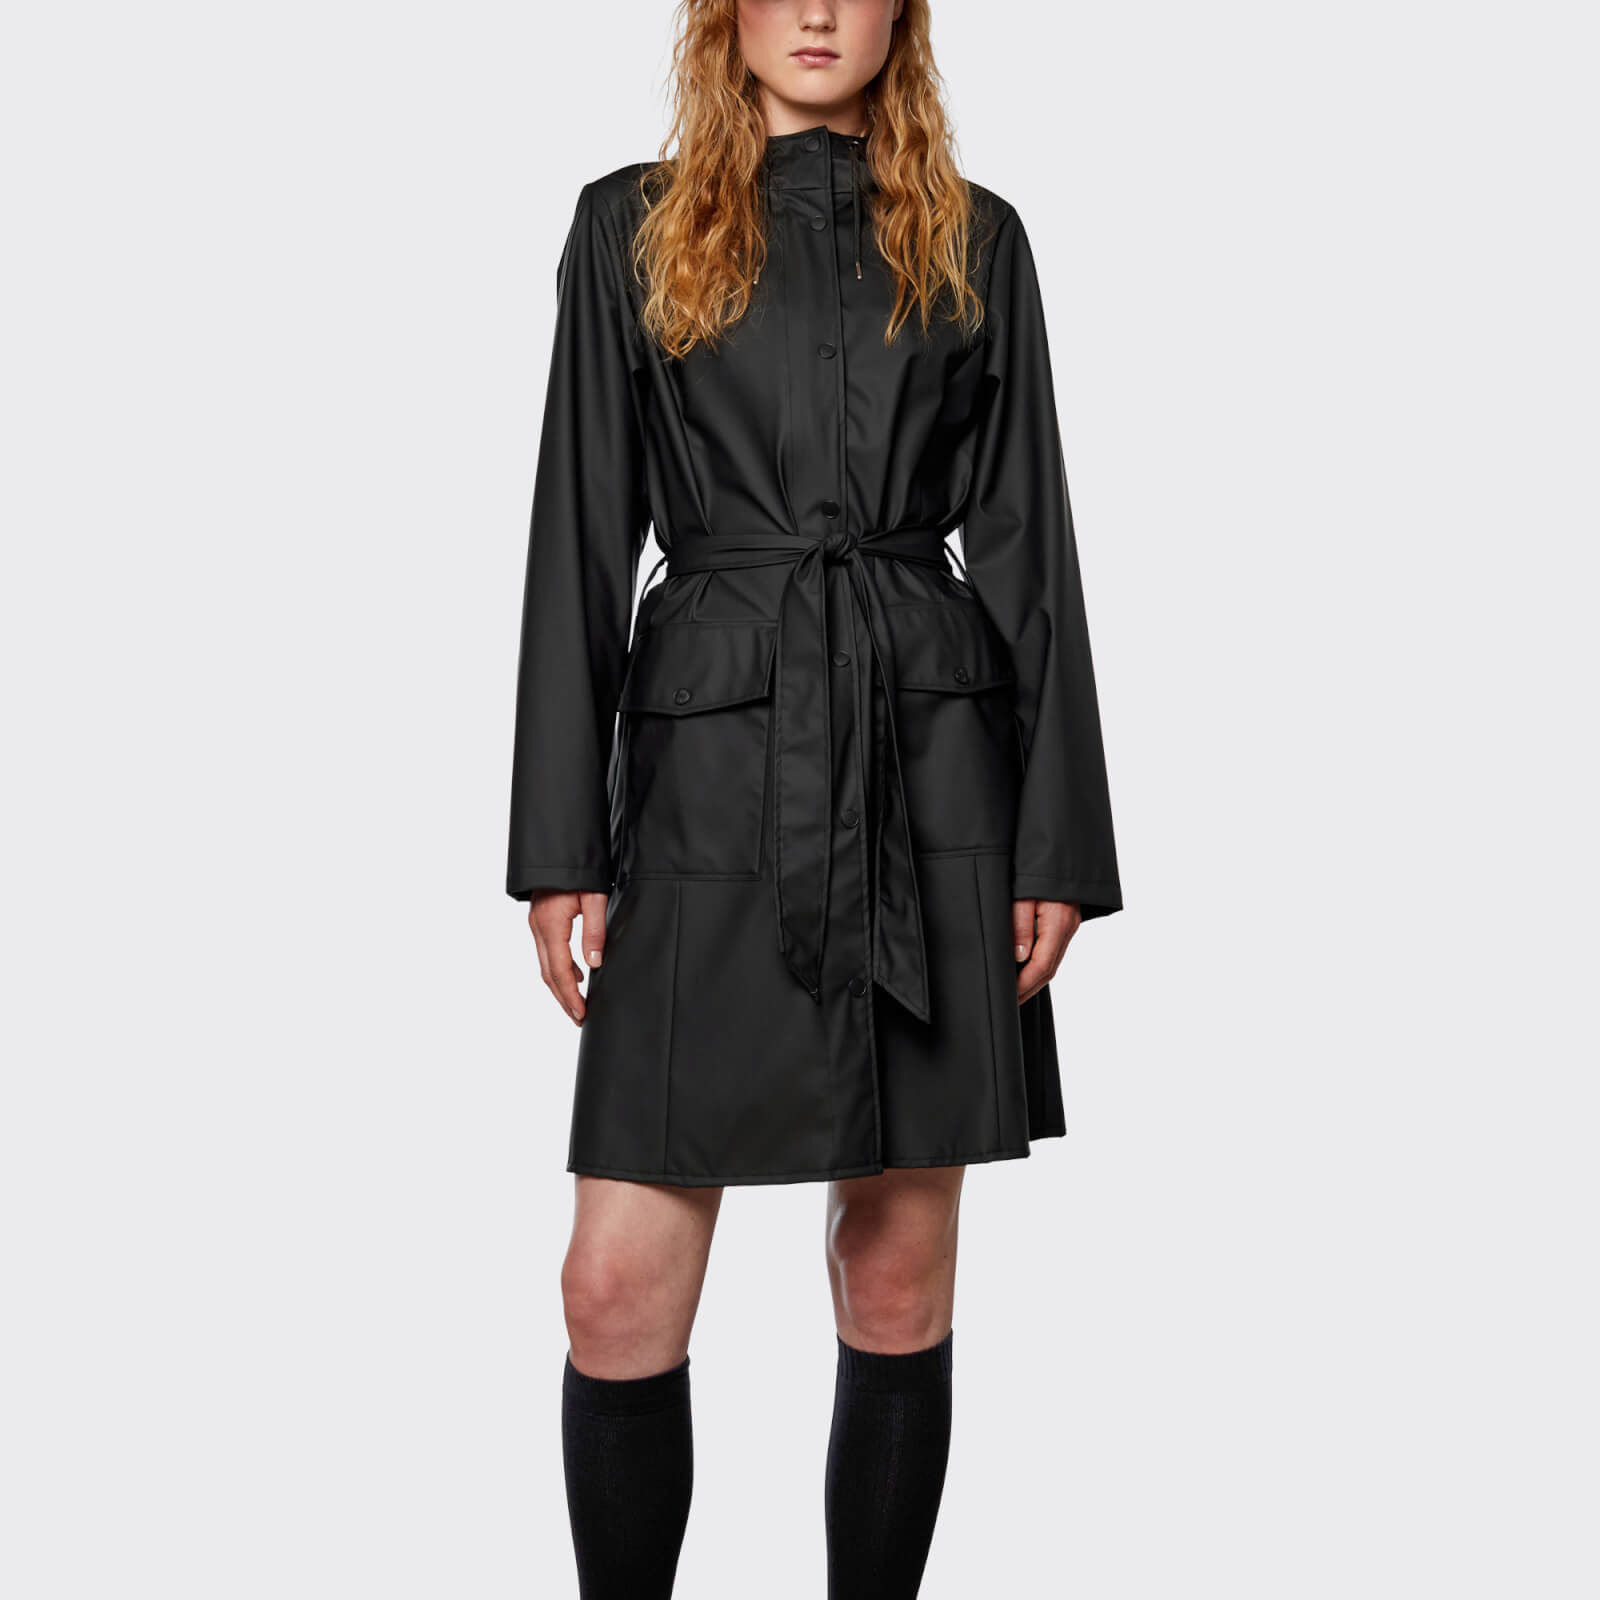 Rains Women's Curve Jacket - Black - S von Rains